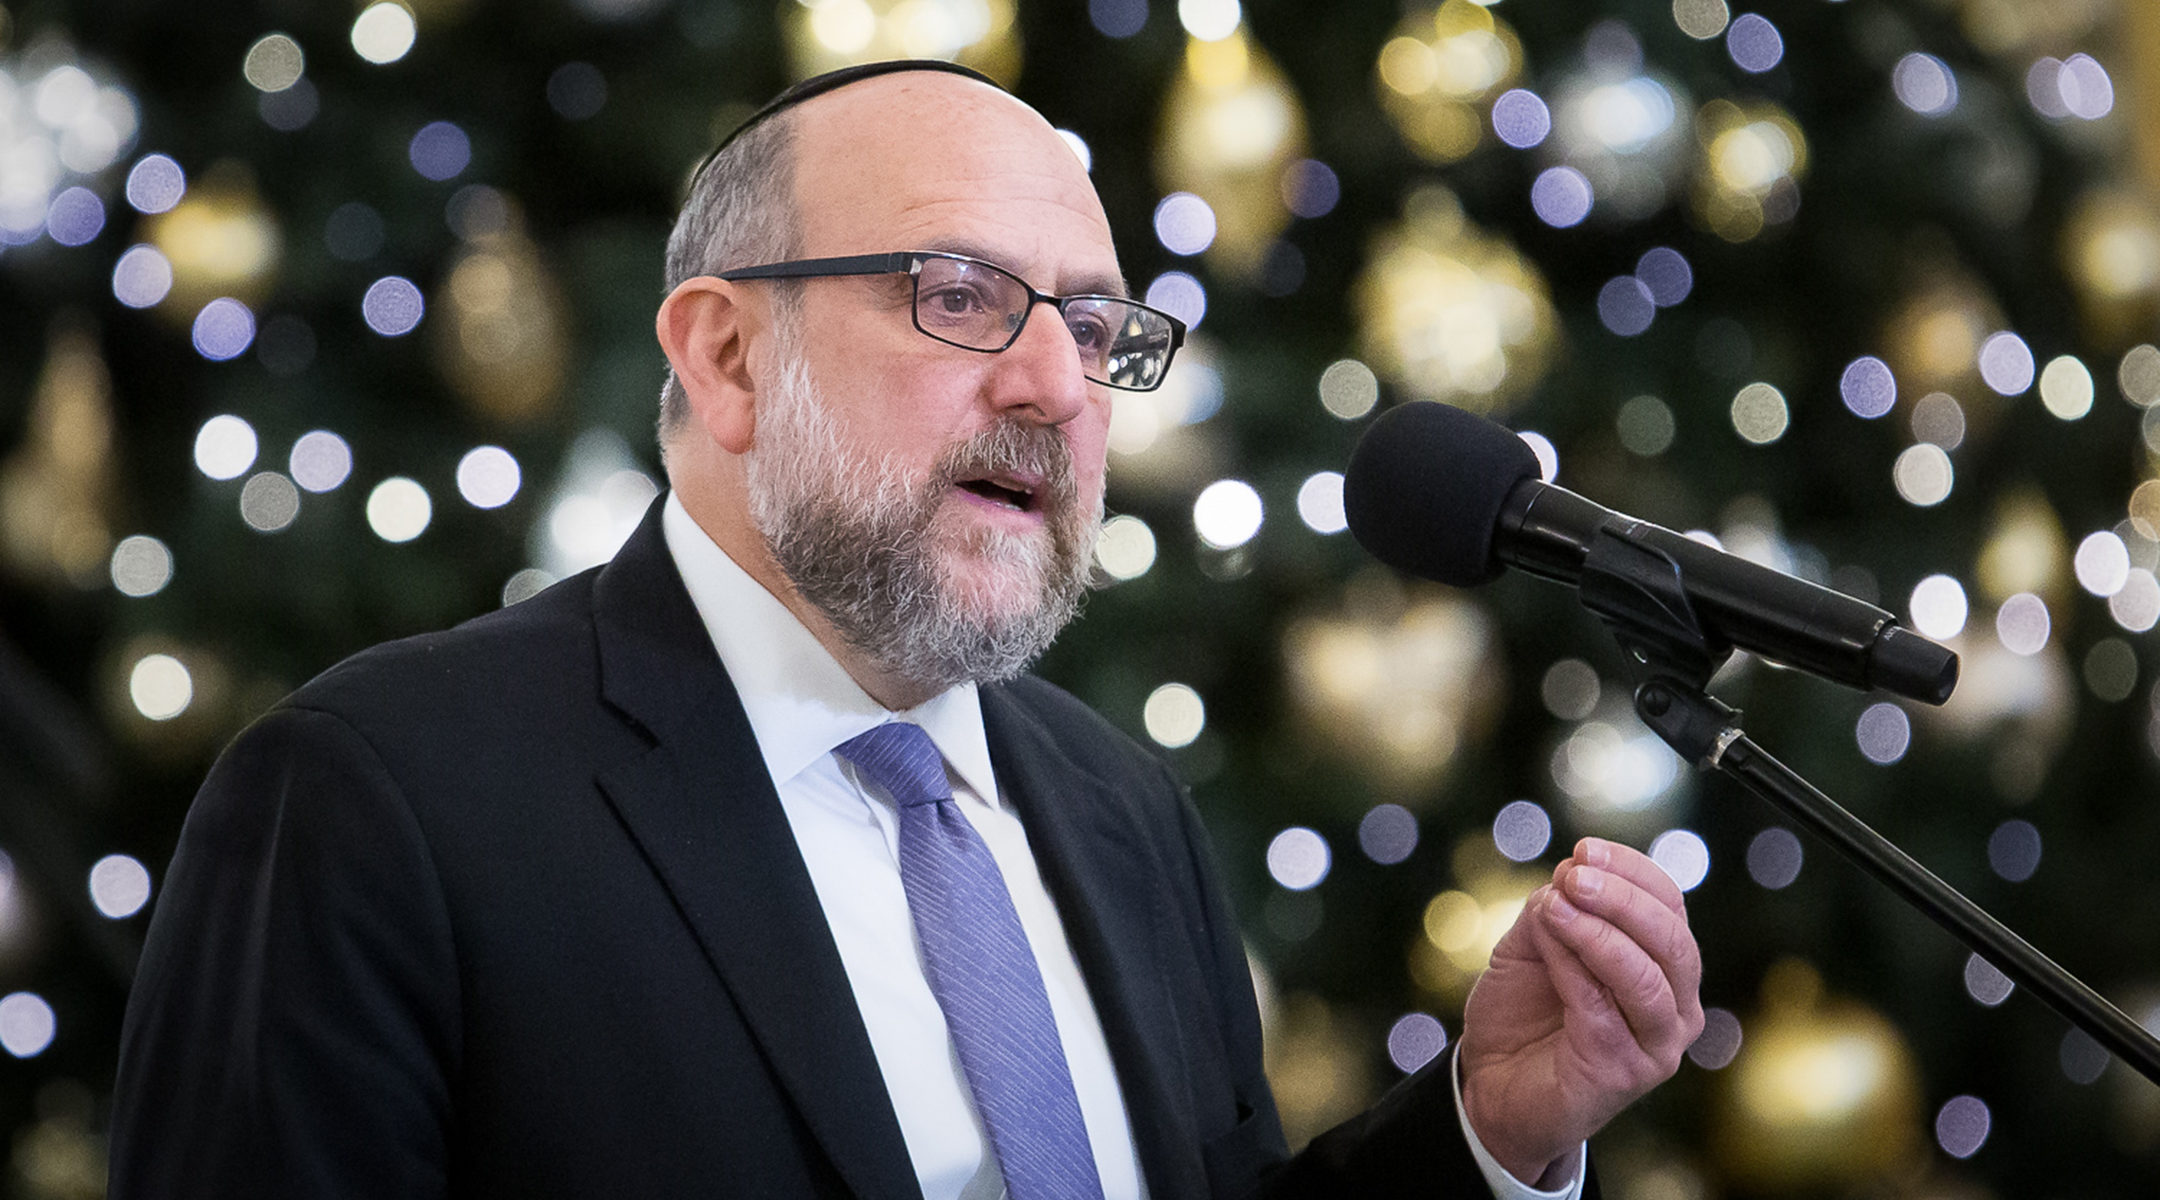 Polish Chief Rabbi Michael Schudrich delivering a speech in Warsaw, Poland on Jan. 2019 (Mateusz Wlodarczyk/NurPhoto via Getty Images)